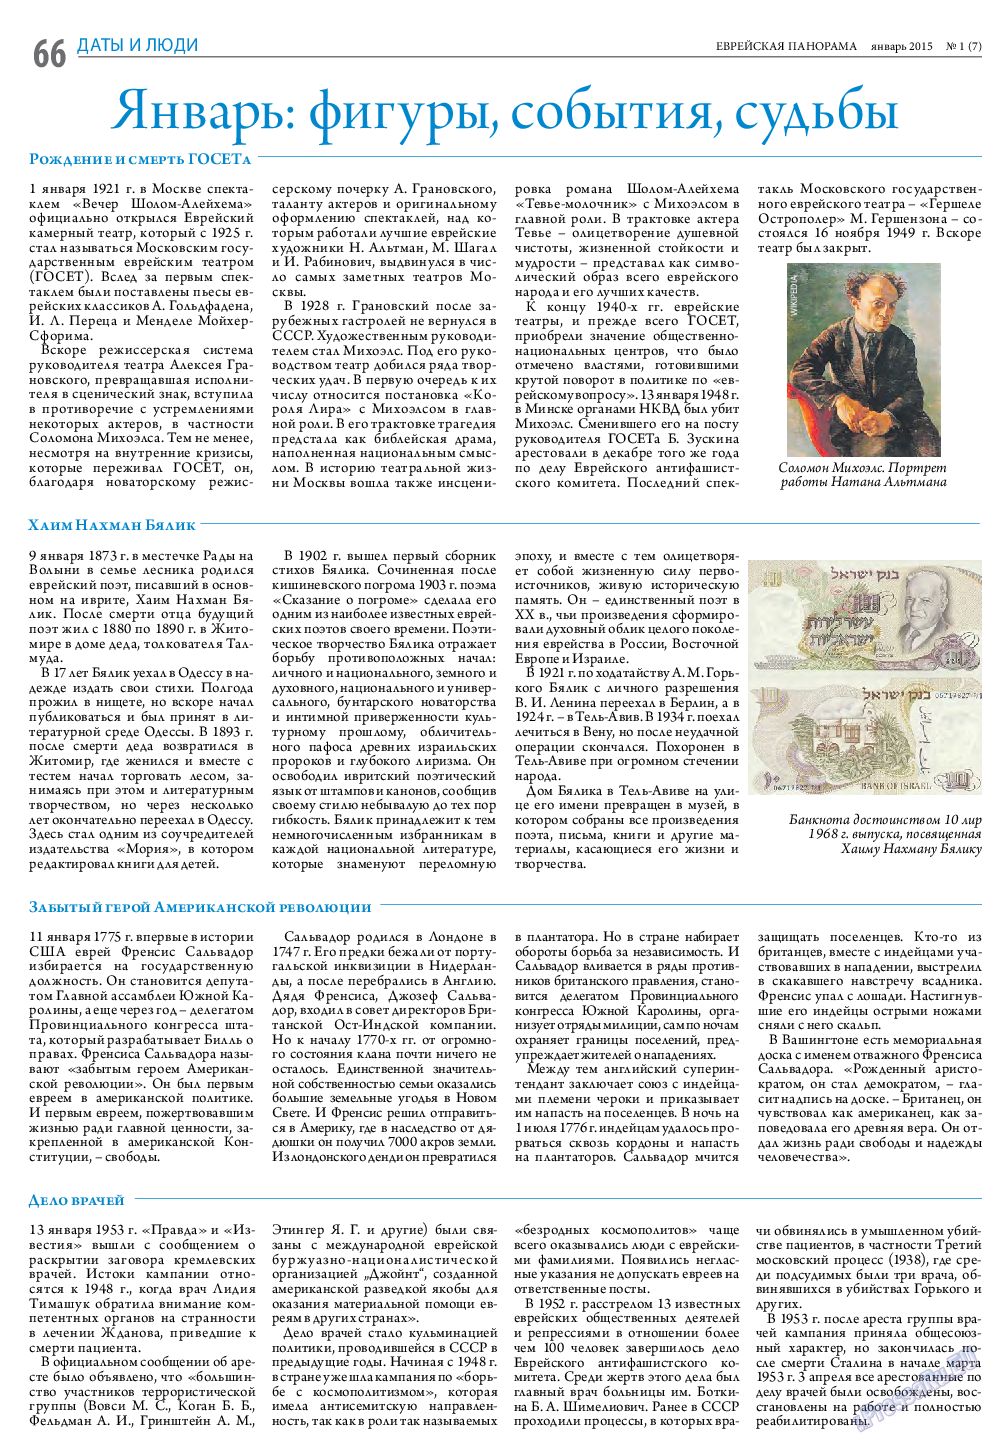 Еврейская панорама, газета. 2015 №1 стр.66